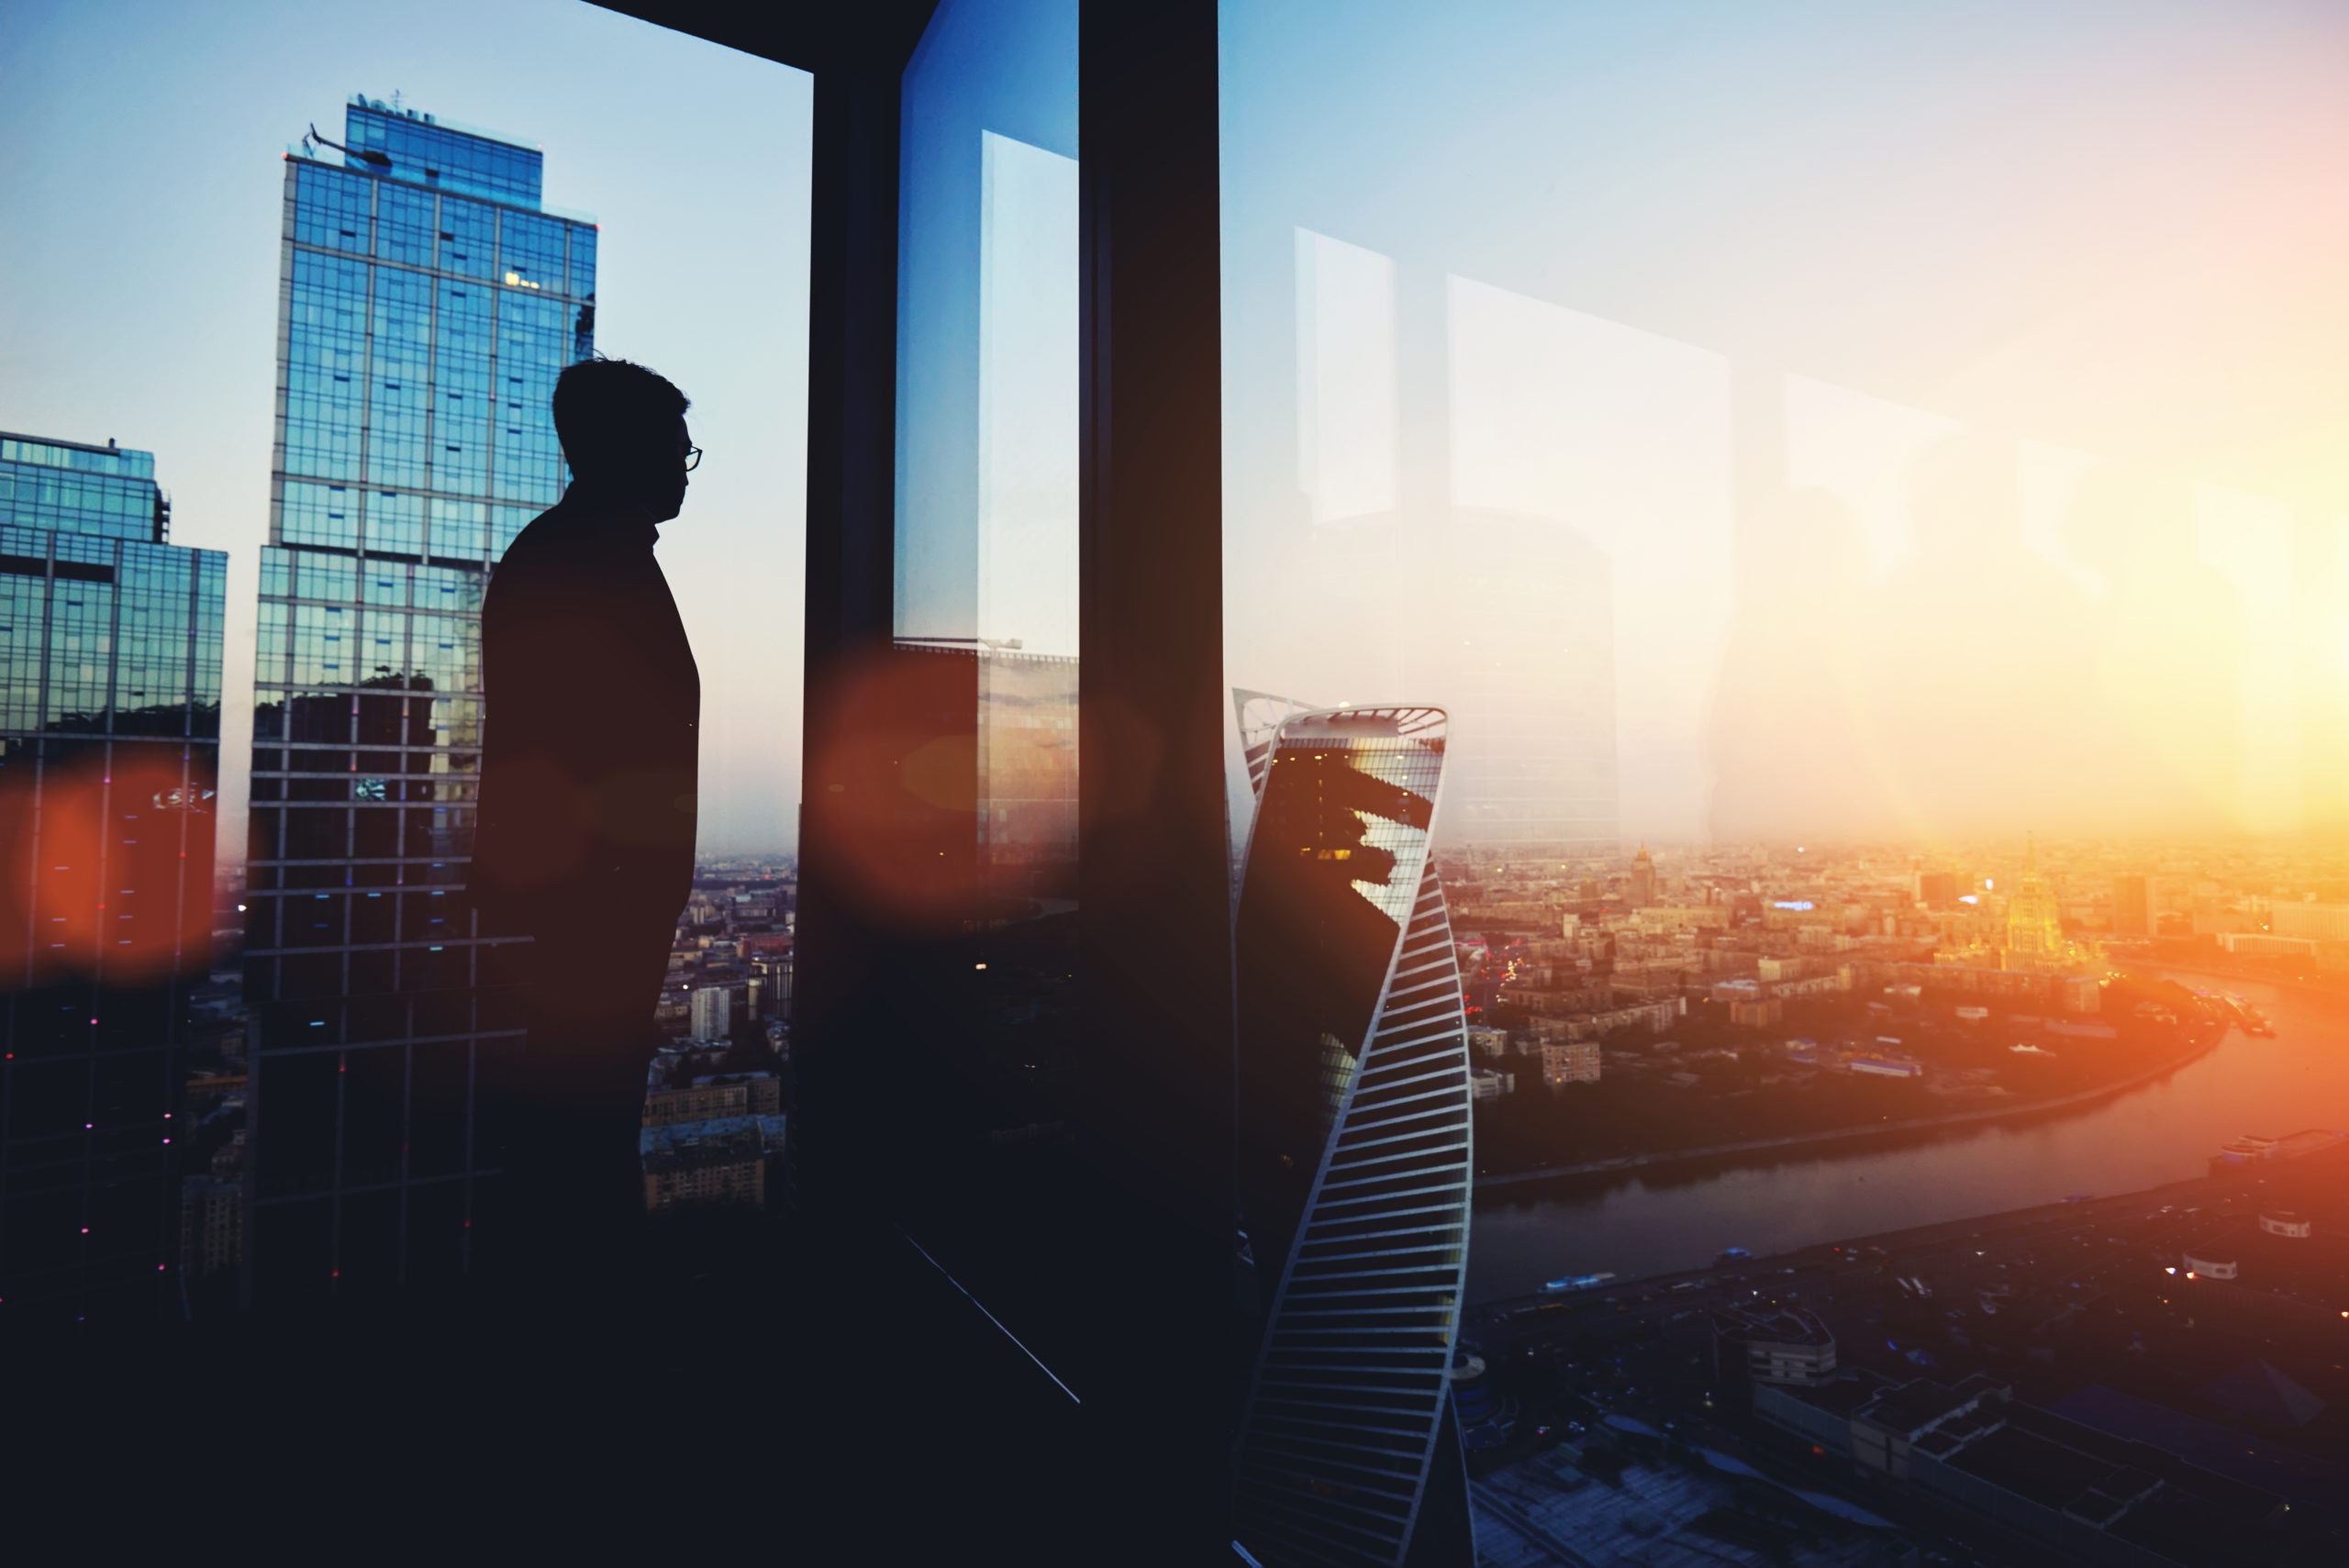 man looking out large window of office building | Jeffrey Epstein | RM Warner Internet Law Firm | Daniel Warner | Daniel R Warner | Raees Mohamed